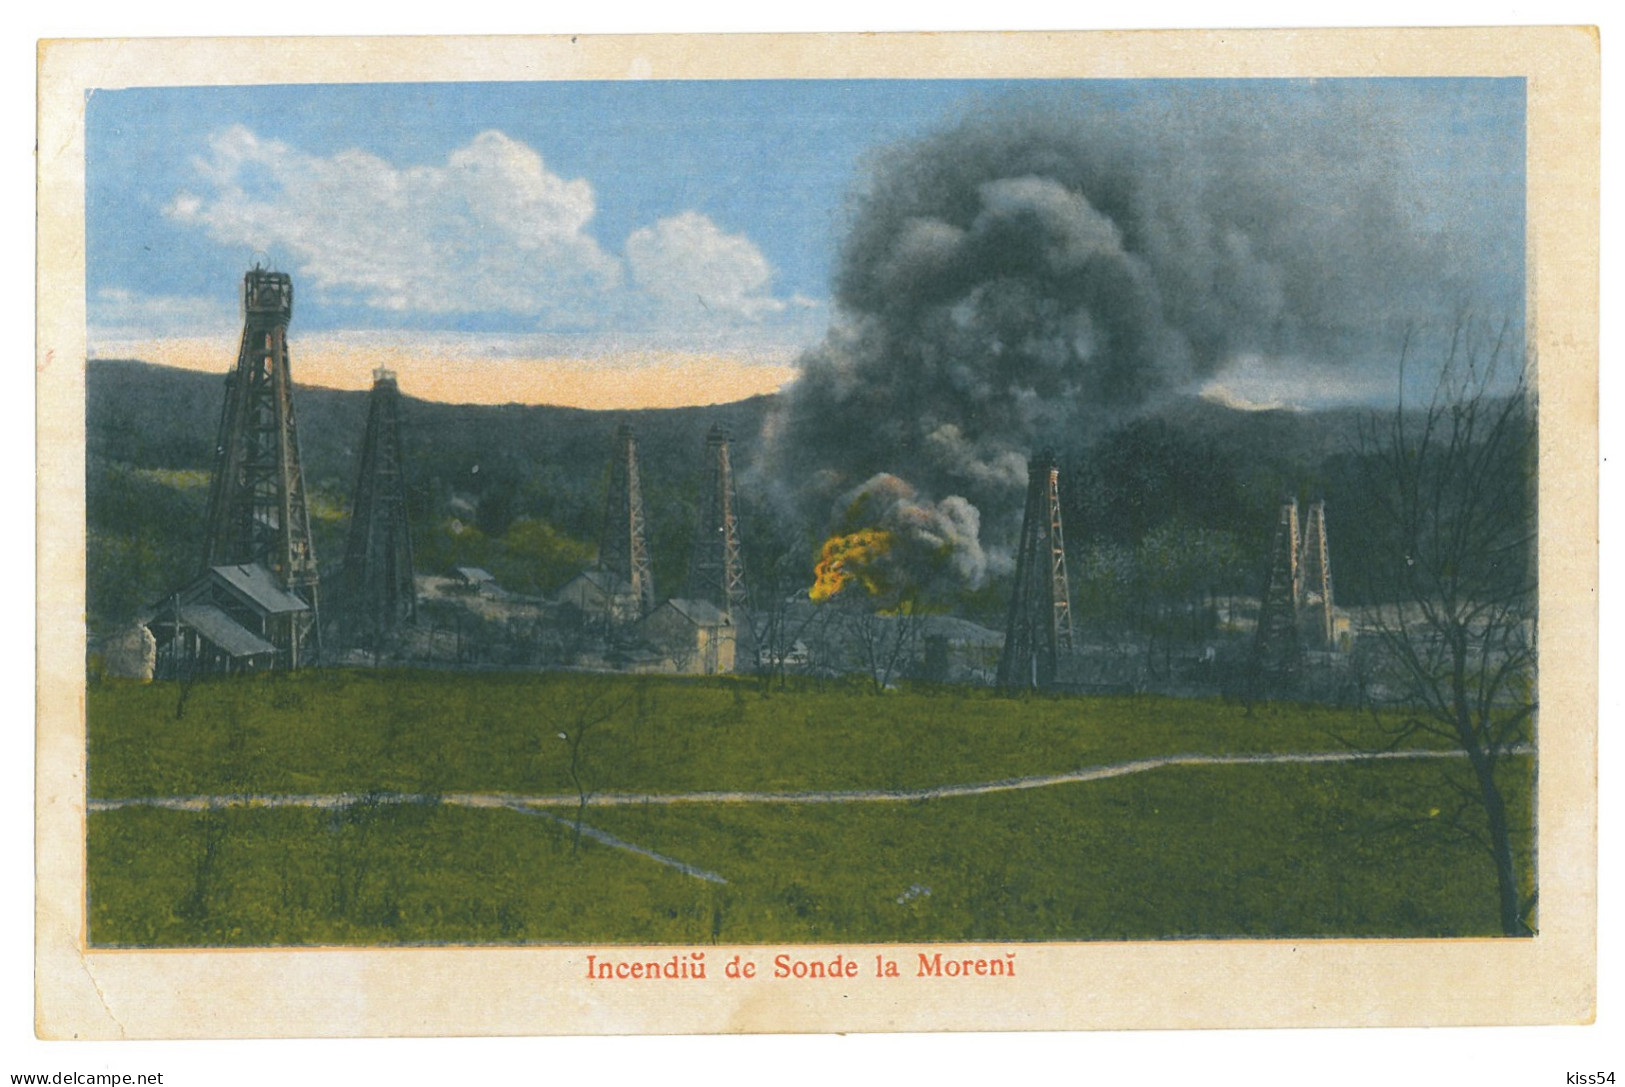 RO 09 - 22648 MORENI, Dambovita, Fire At The Oil Wells, Romania - Old Postcard - Unused - Roumanie